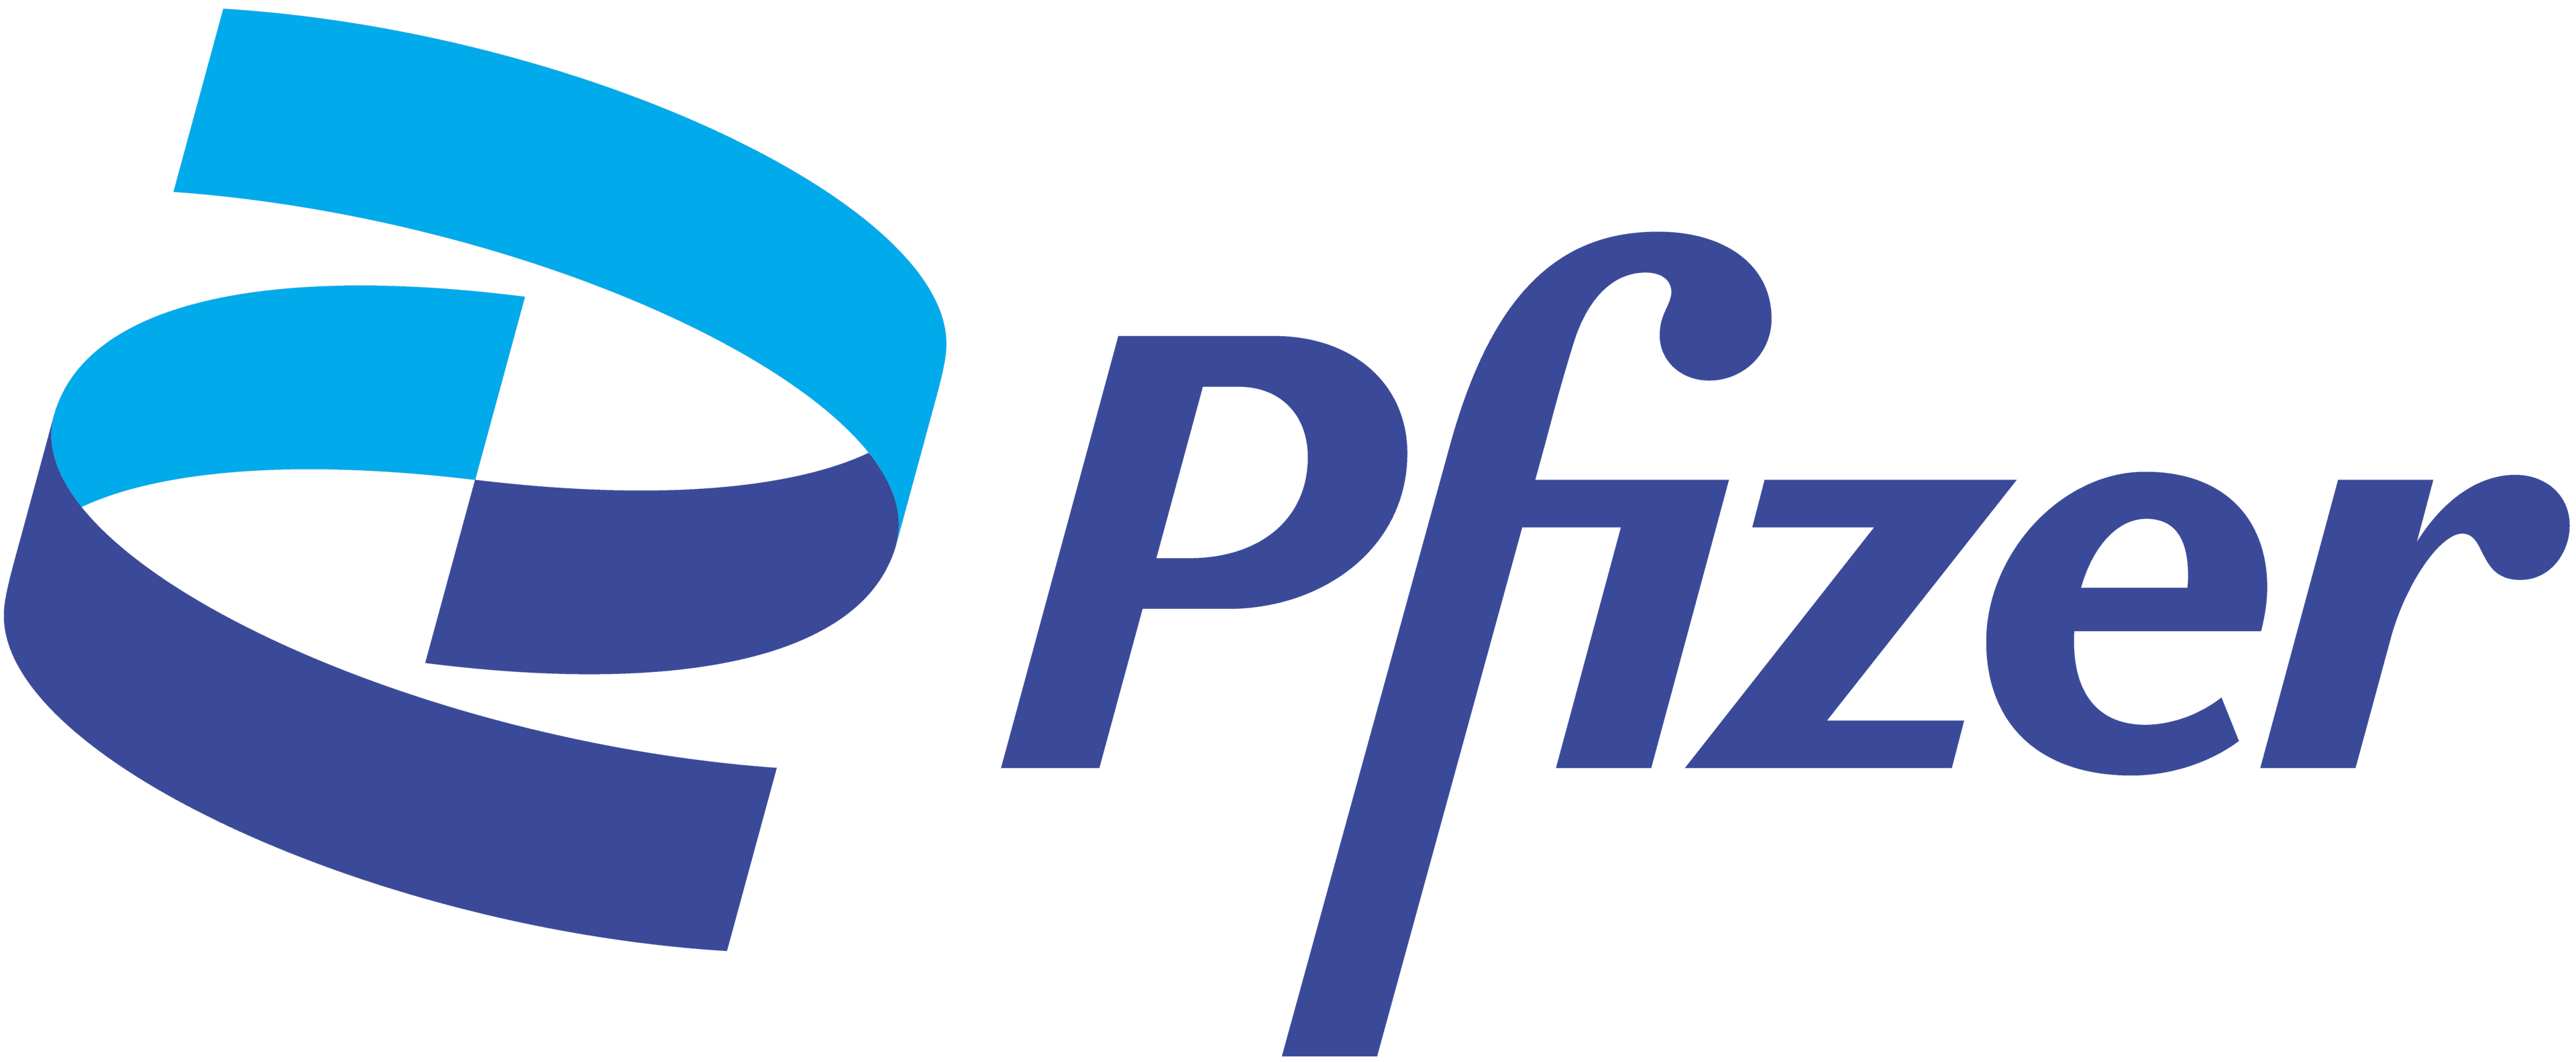 Pfizer Receives FDA Breakthrough Therapy Designation for its RSV Vaccine